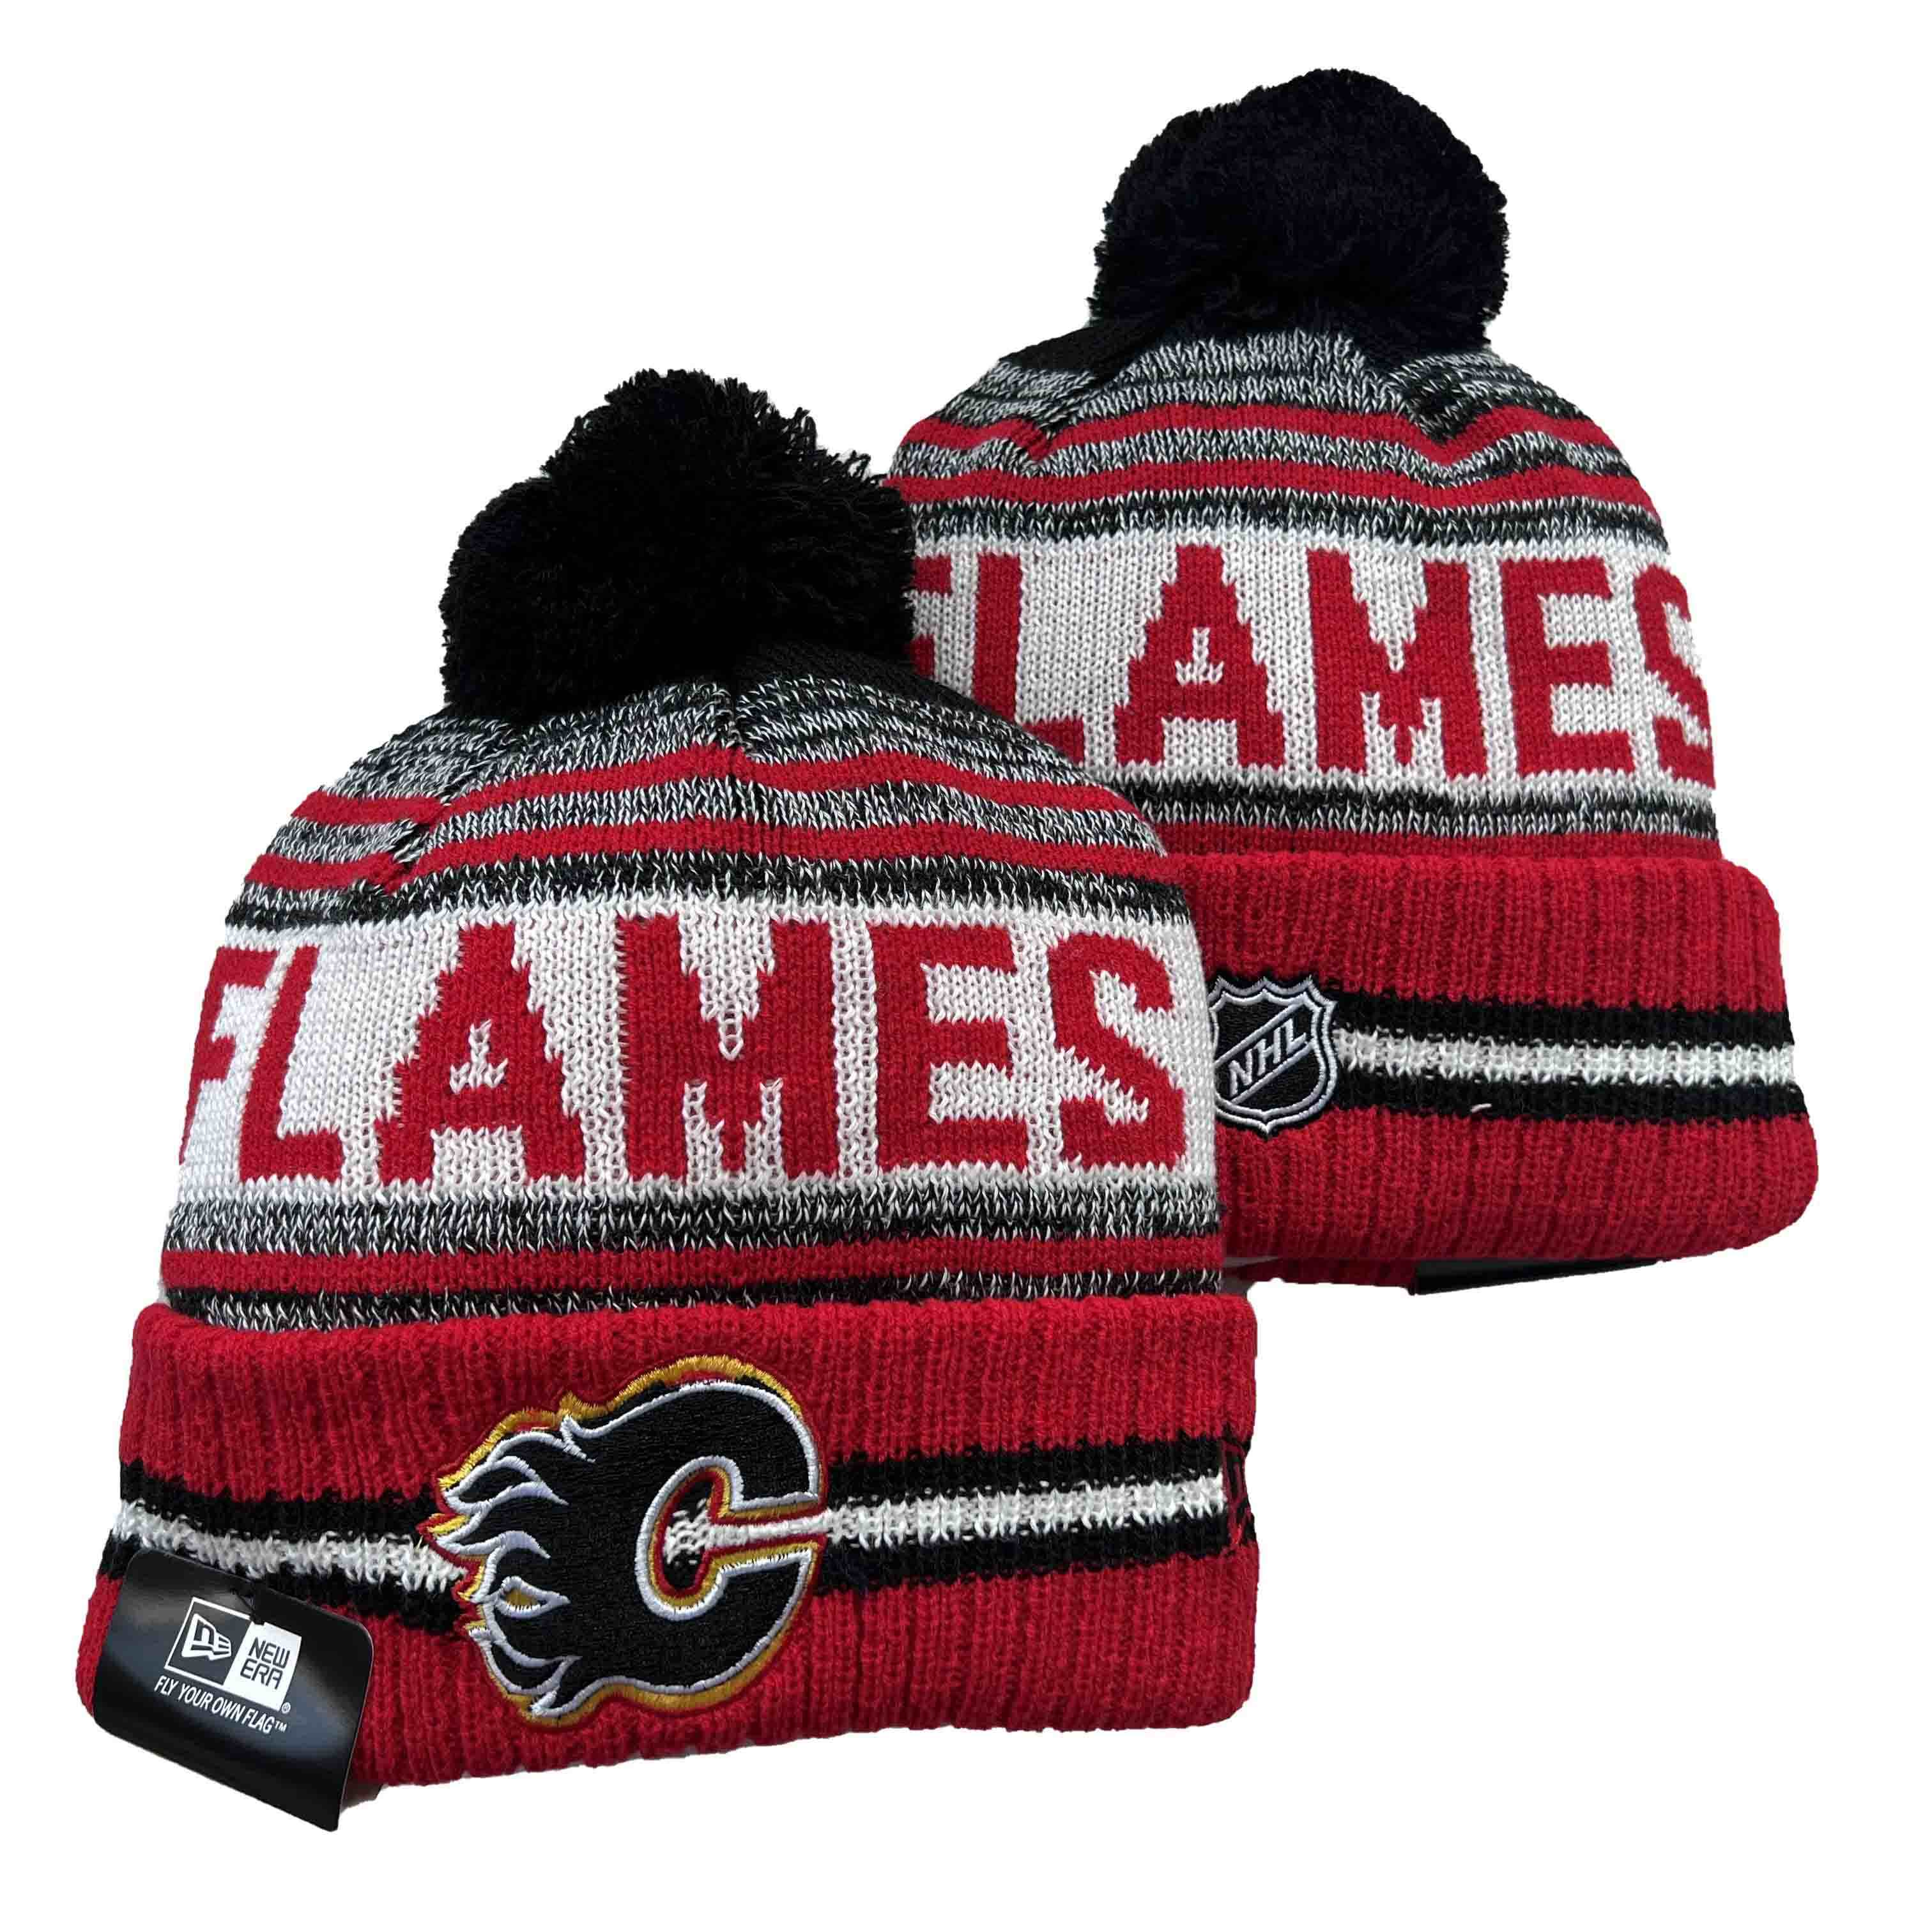 Calgary Flames knit hat YD1